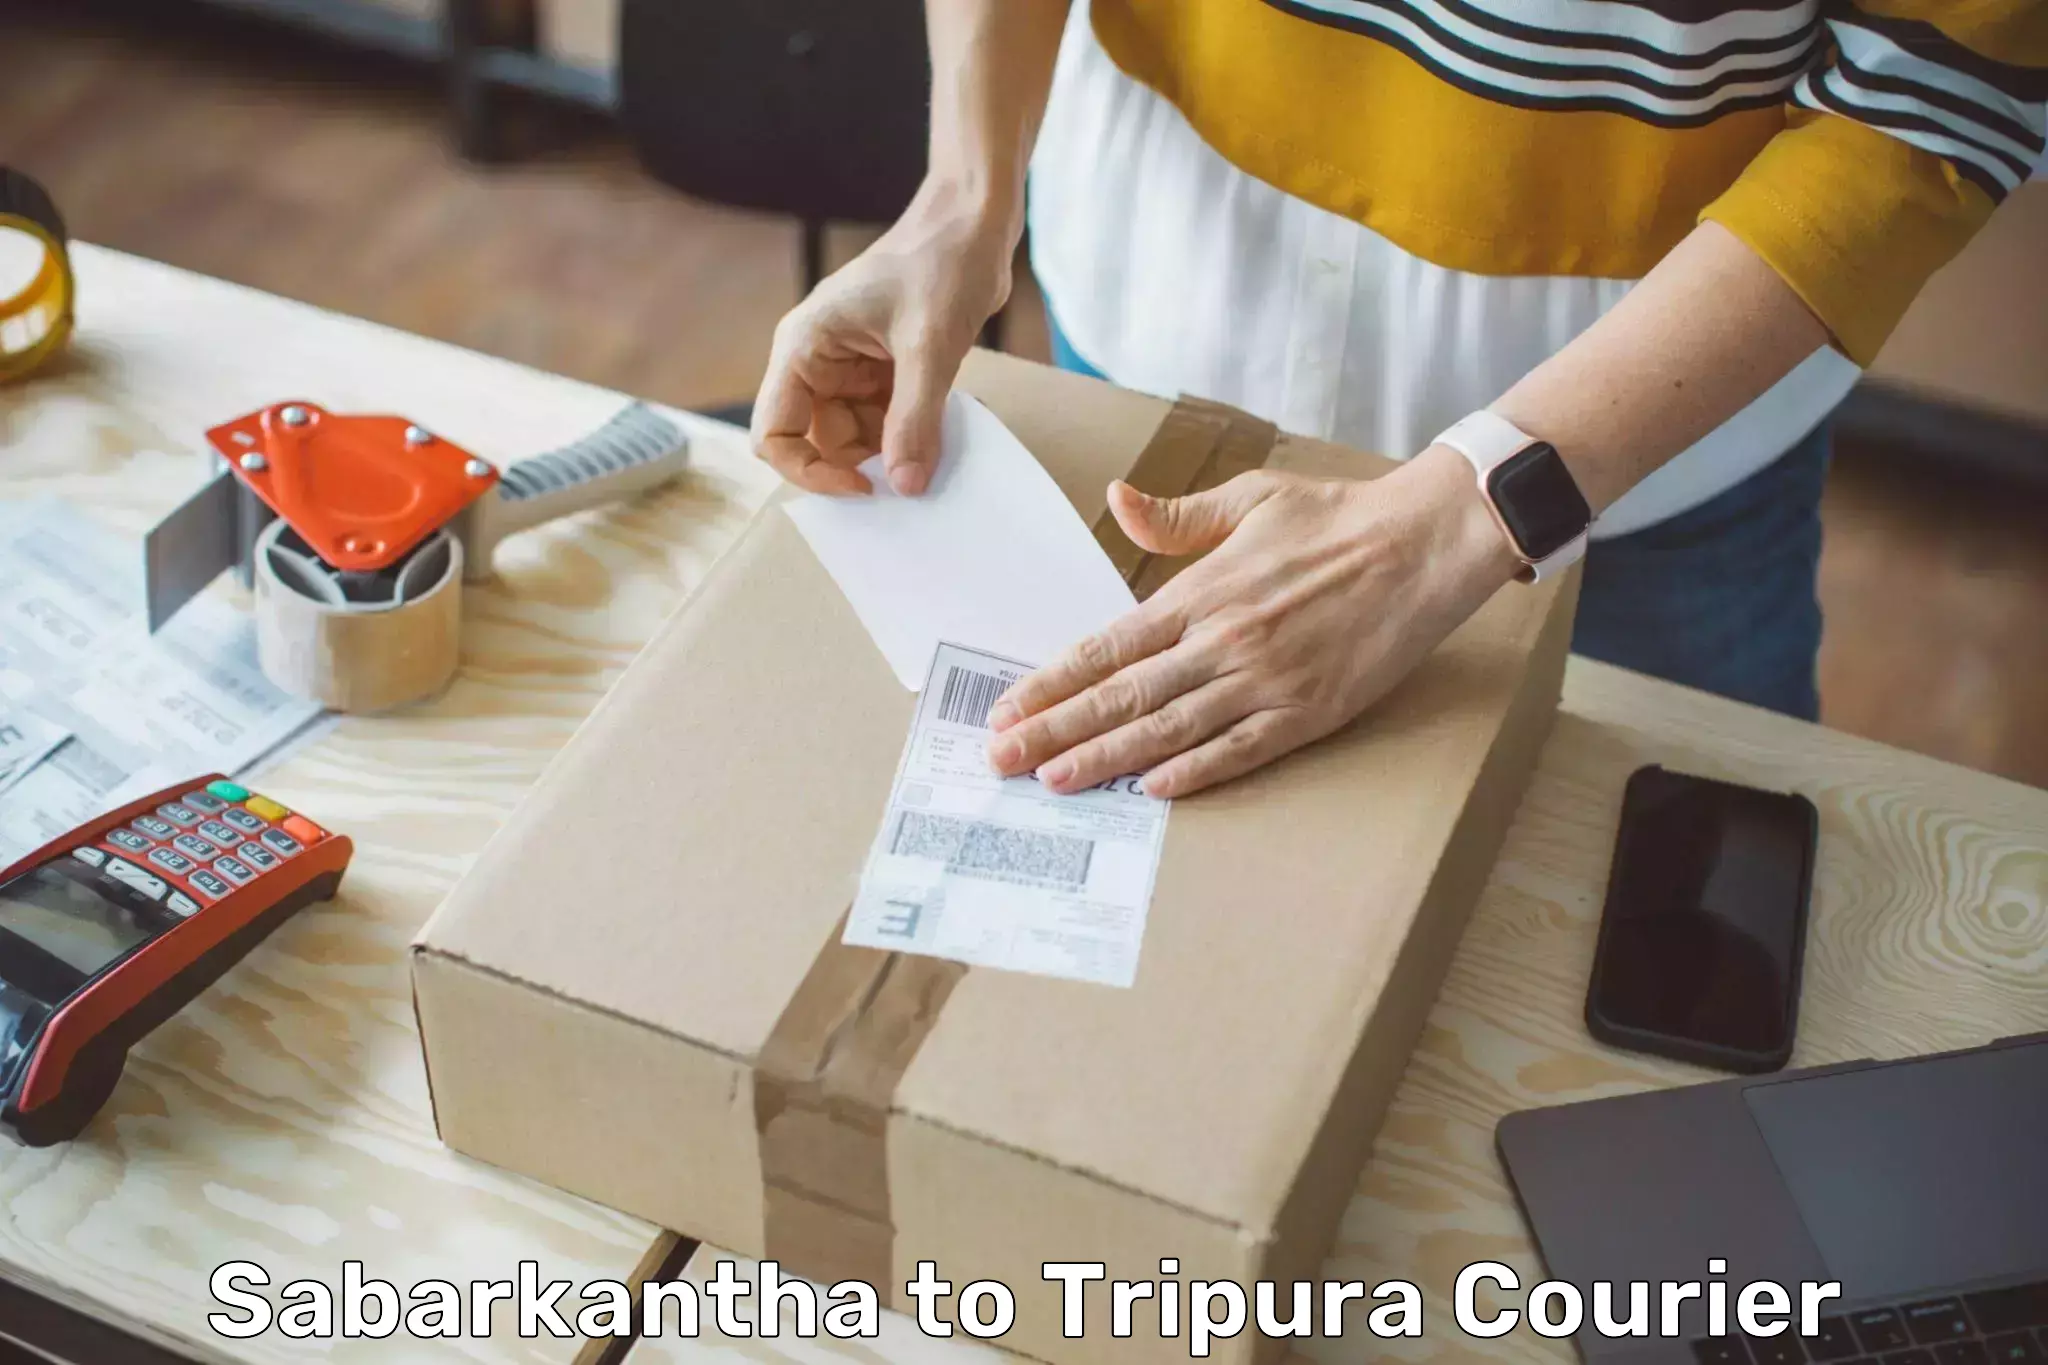 24-hour courier service Sabarkantha to Udaipur Tripura